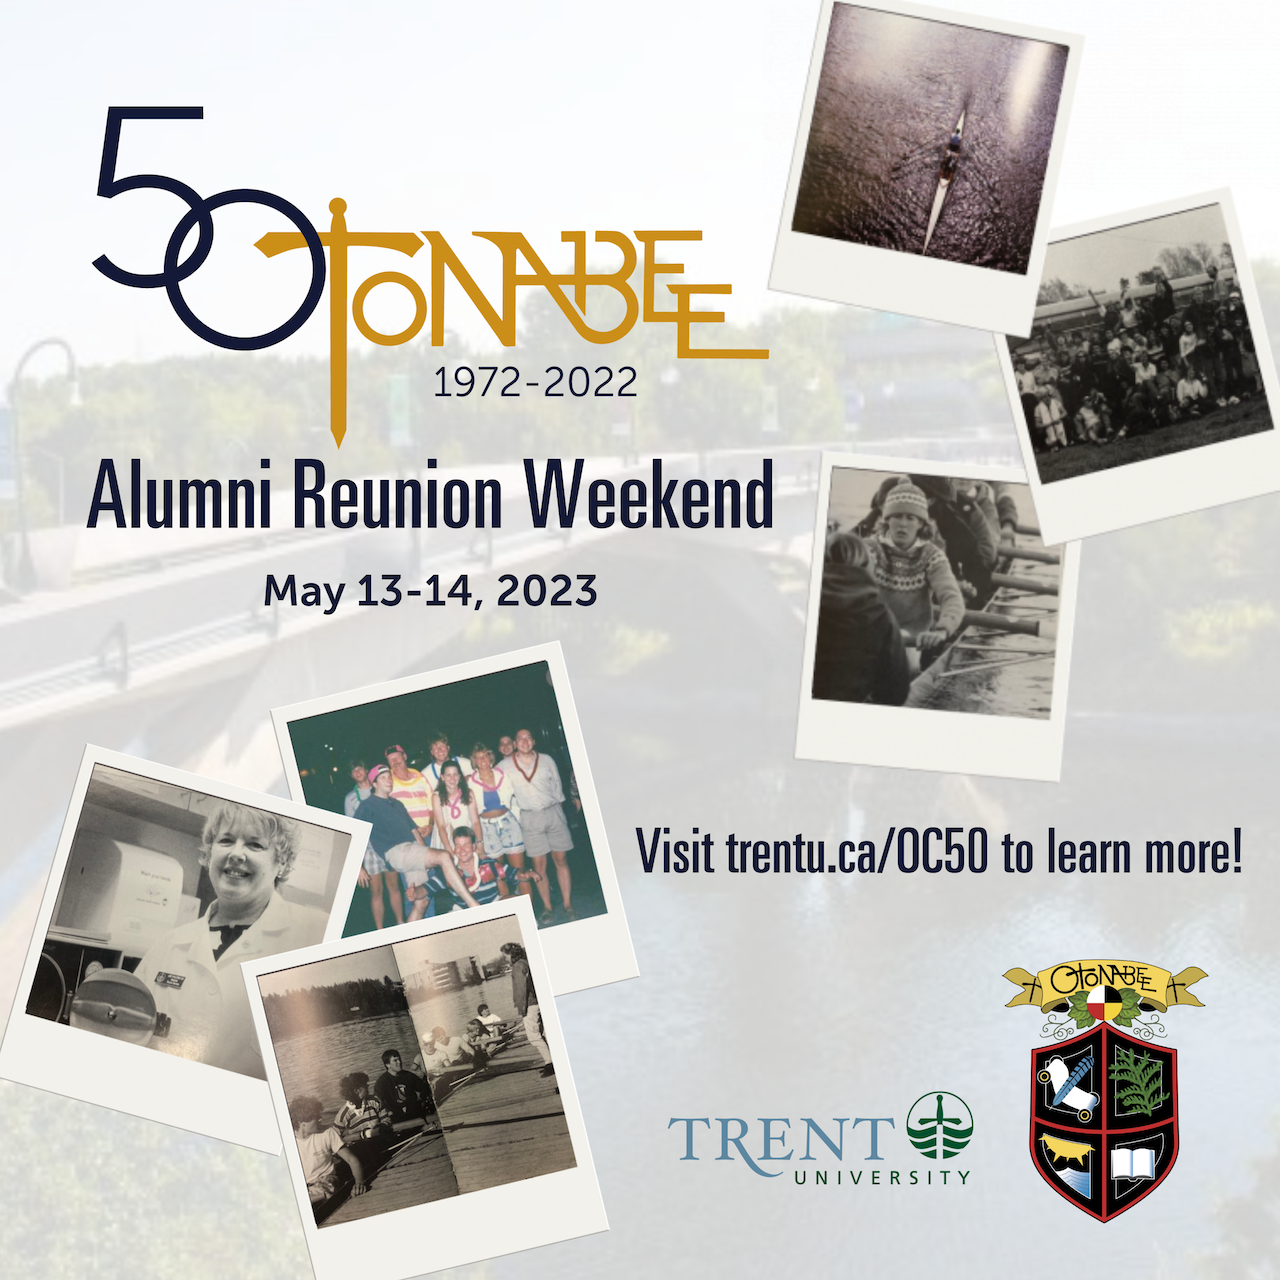 Poster Image of Otonabee College 50 years reunion. Image also links to www.trentu.ca/OC50